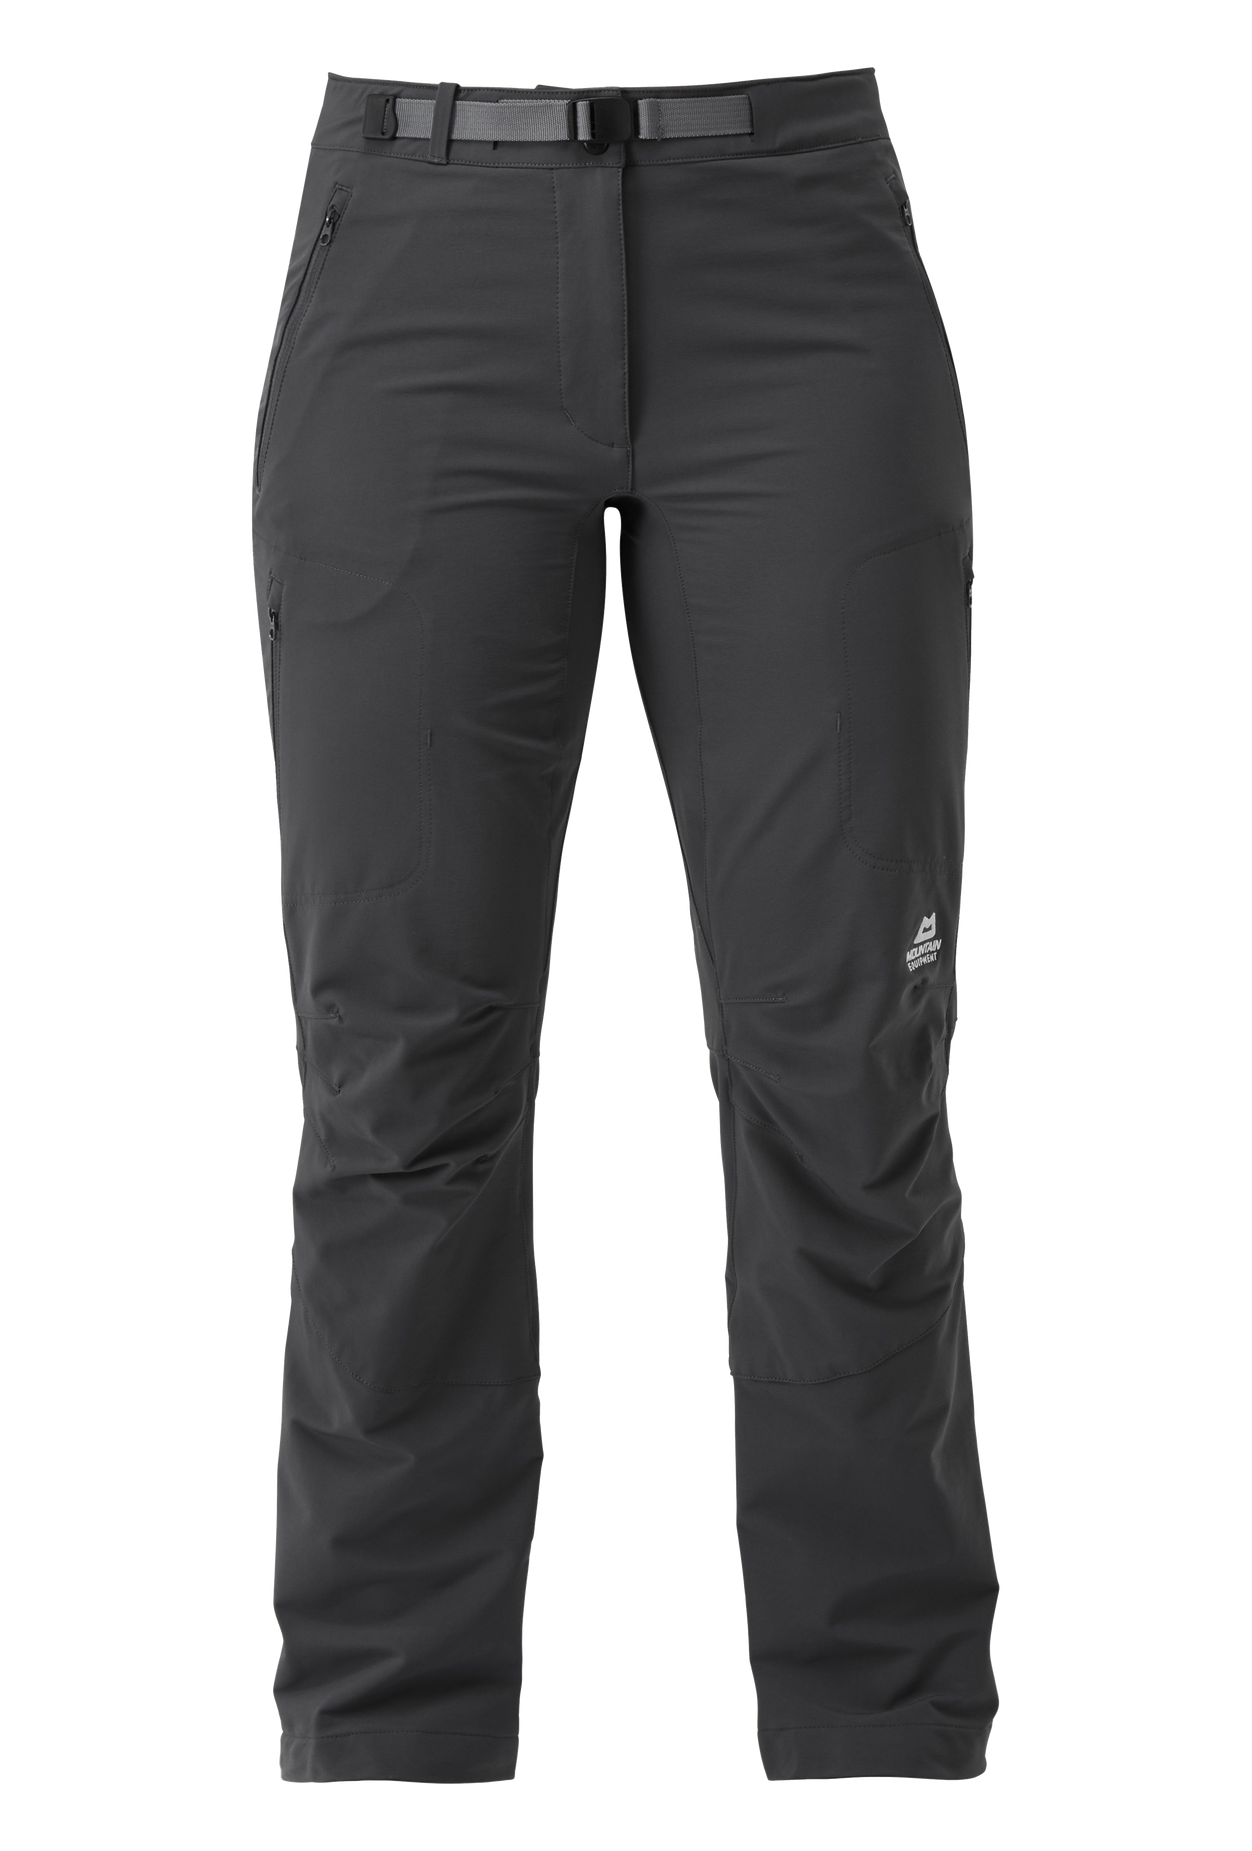 Mountain Equipment dámské softshellové kalhoty Chamois Wmns Pant - zkrácené Barva: Anvil Grey, Velikost: 18/XXL